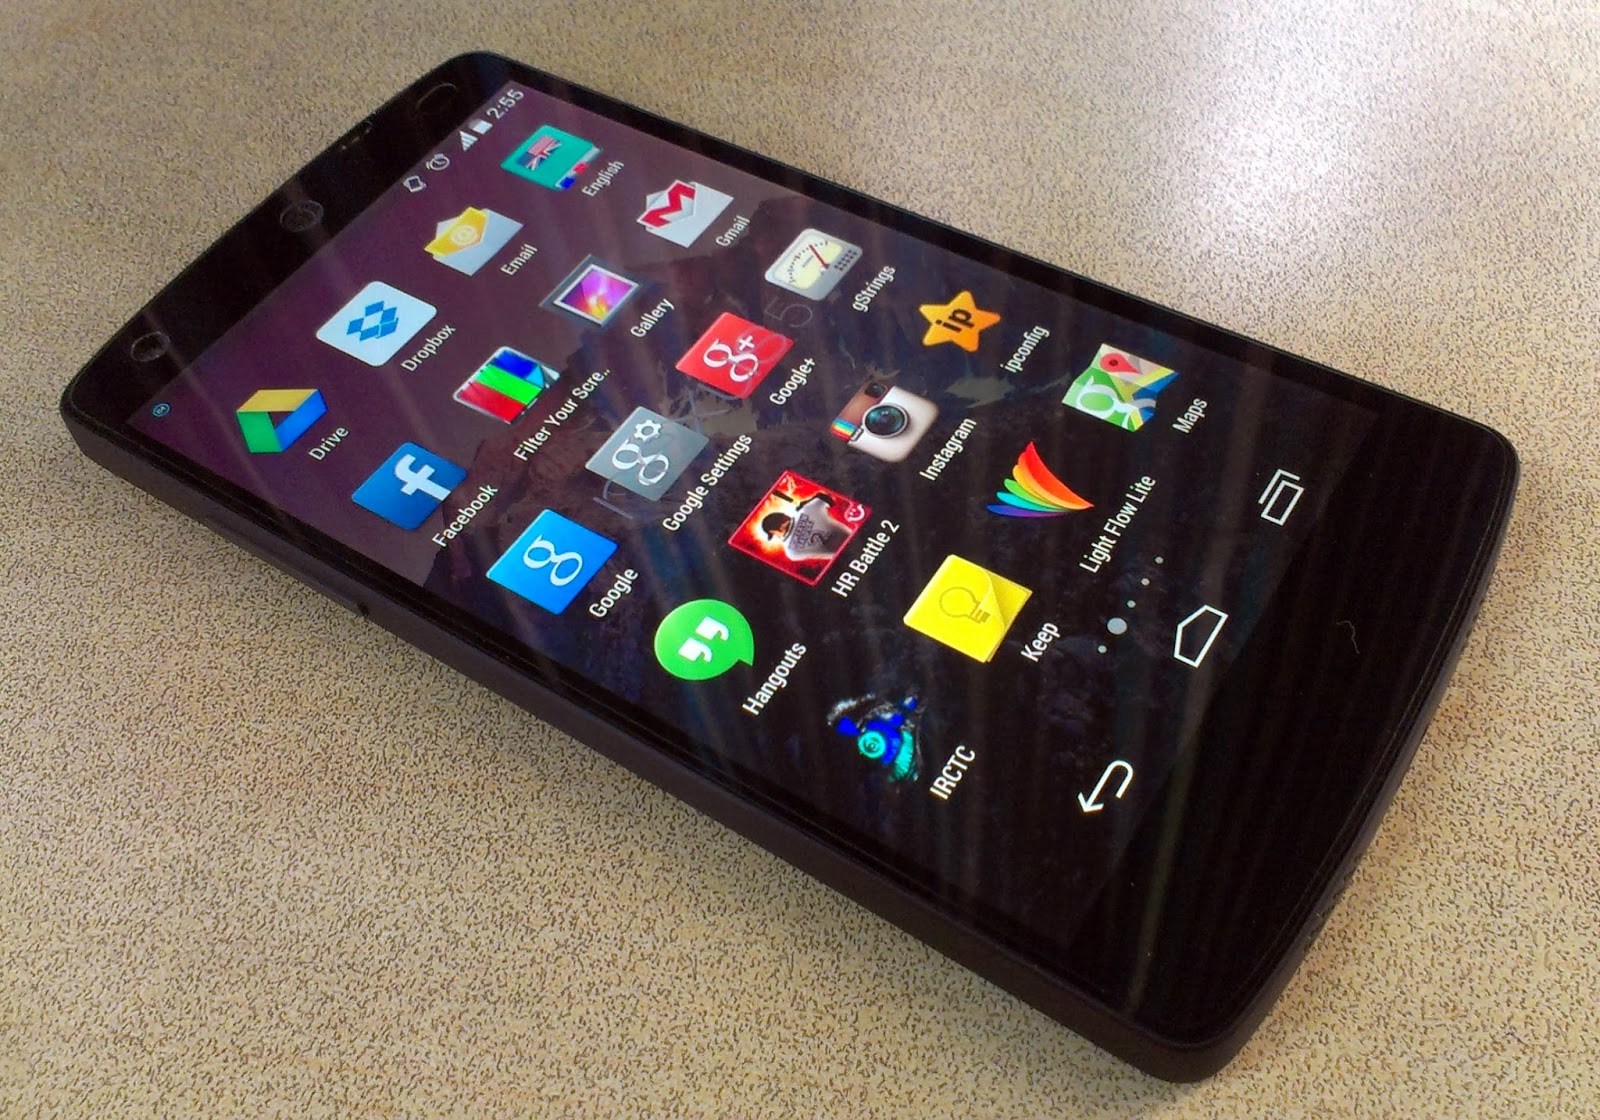 Google+LG+Nexus+5+Android+KitKat+Review+Handson+Detailed+Benchmark++%25281%2529.jpg